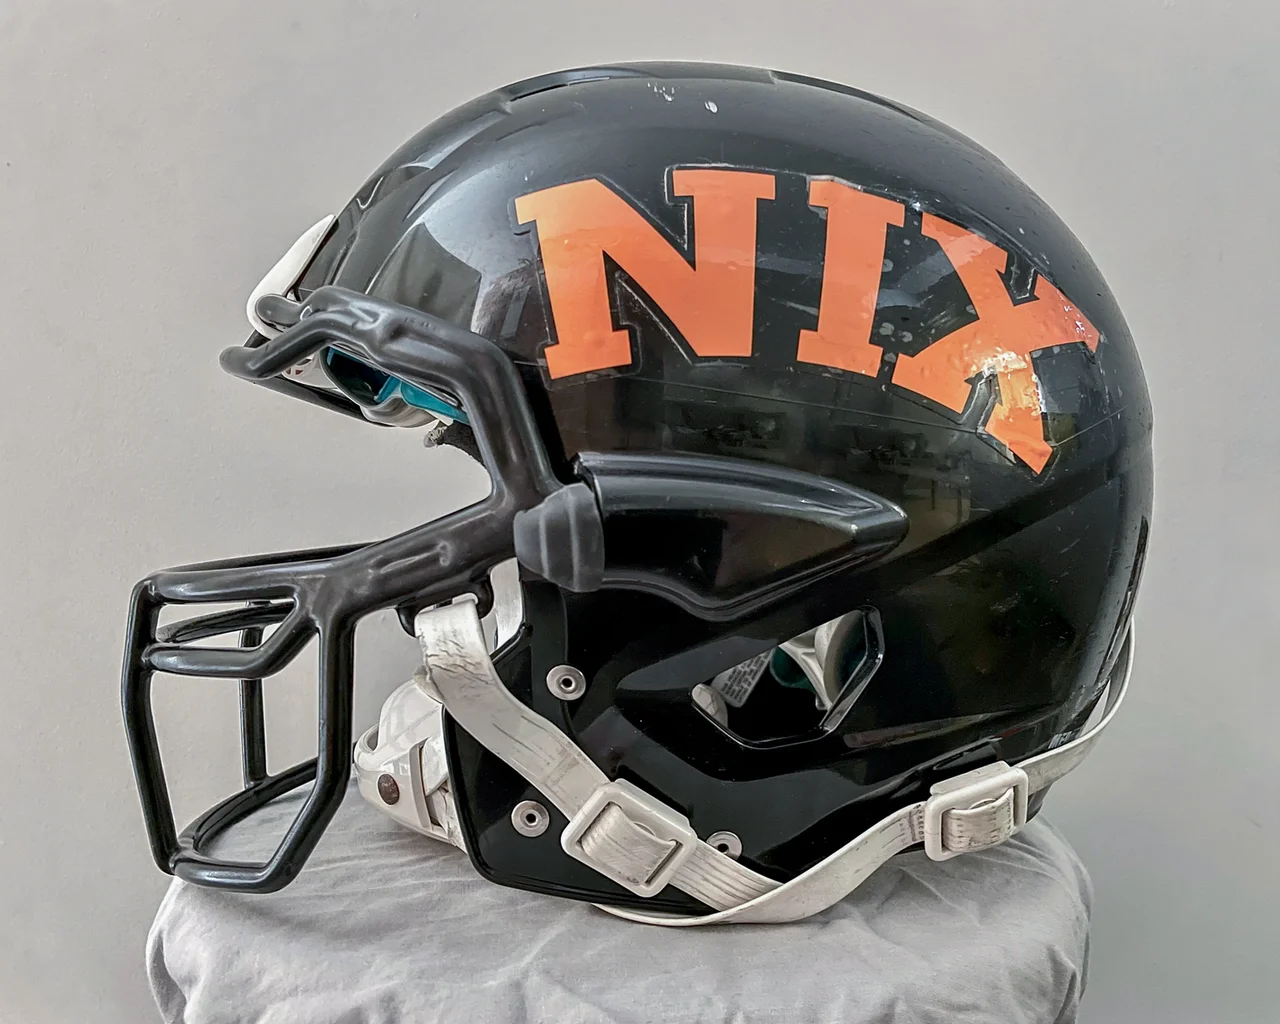 American football helmet with decal 